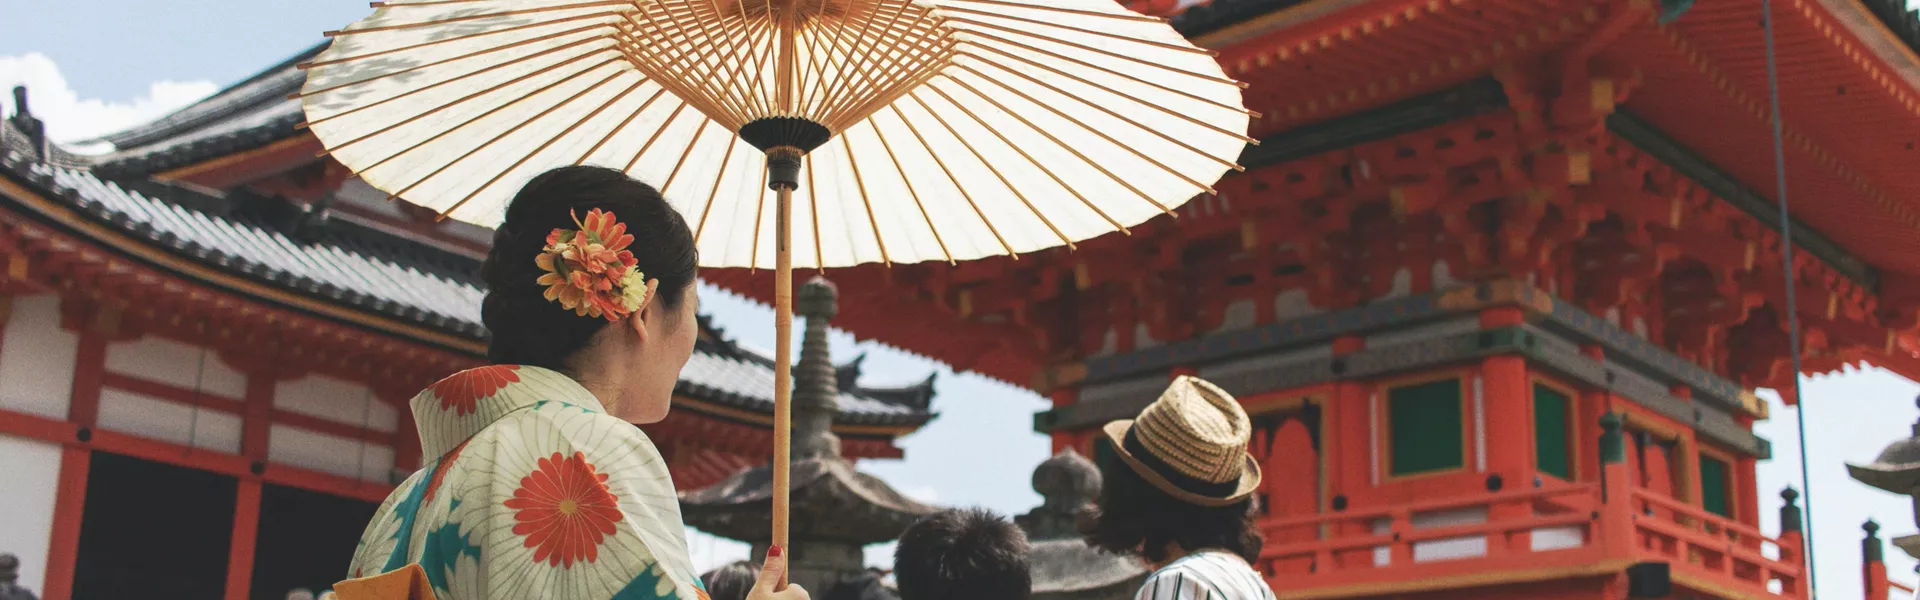 People visiting Kiyomizu-dera temples in Kyoto, Japan